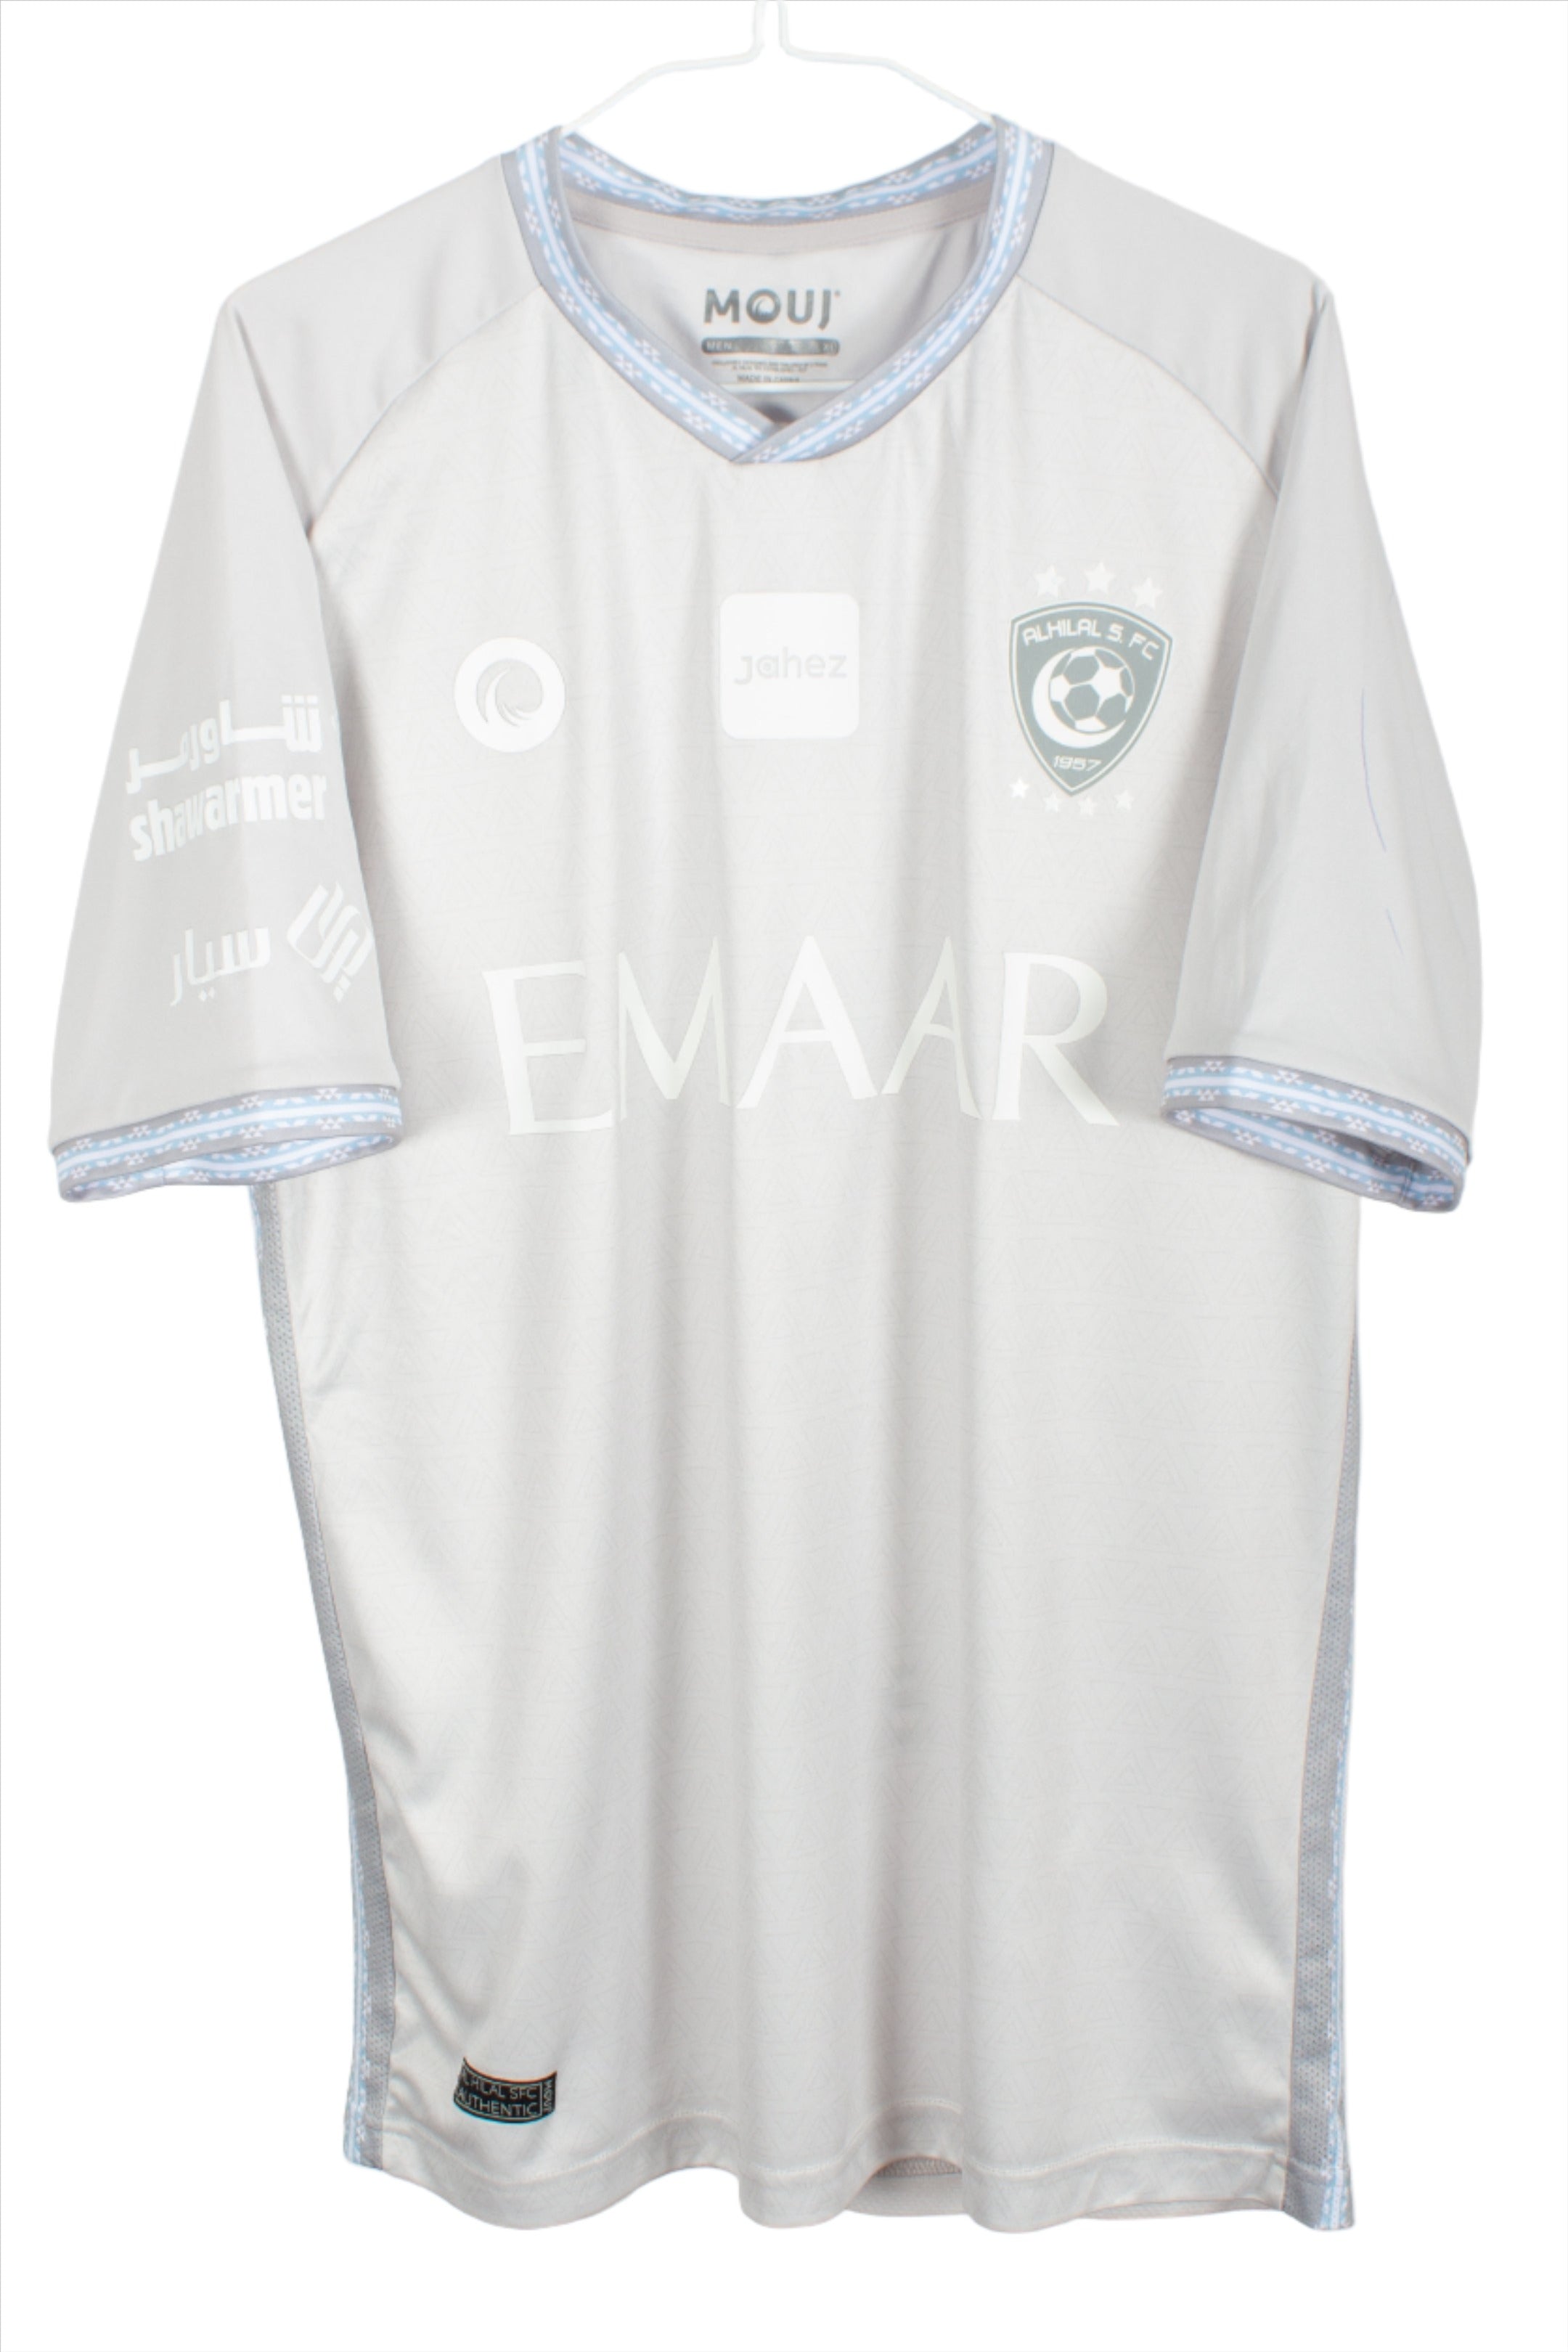 Al-Hilal 2021/22 Away Shirt (XL)